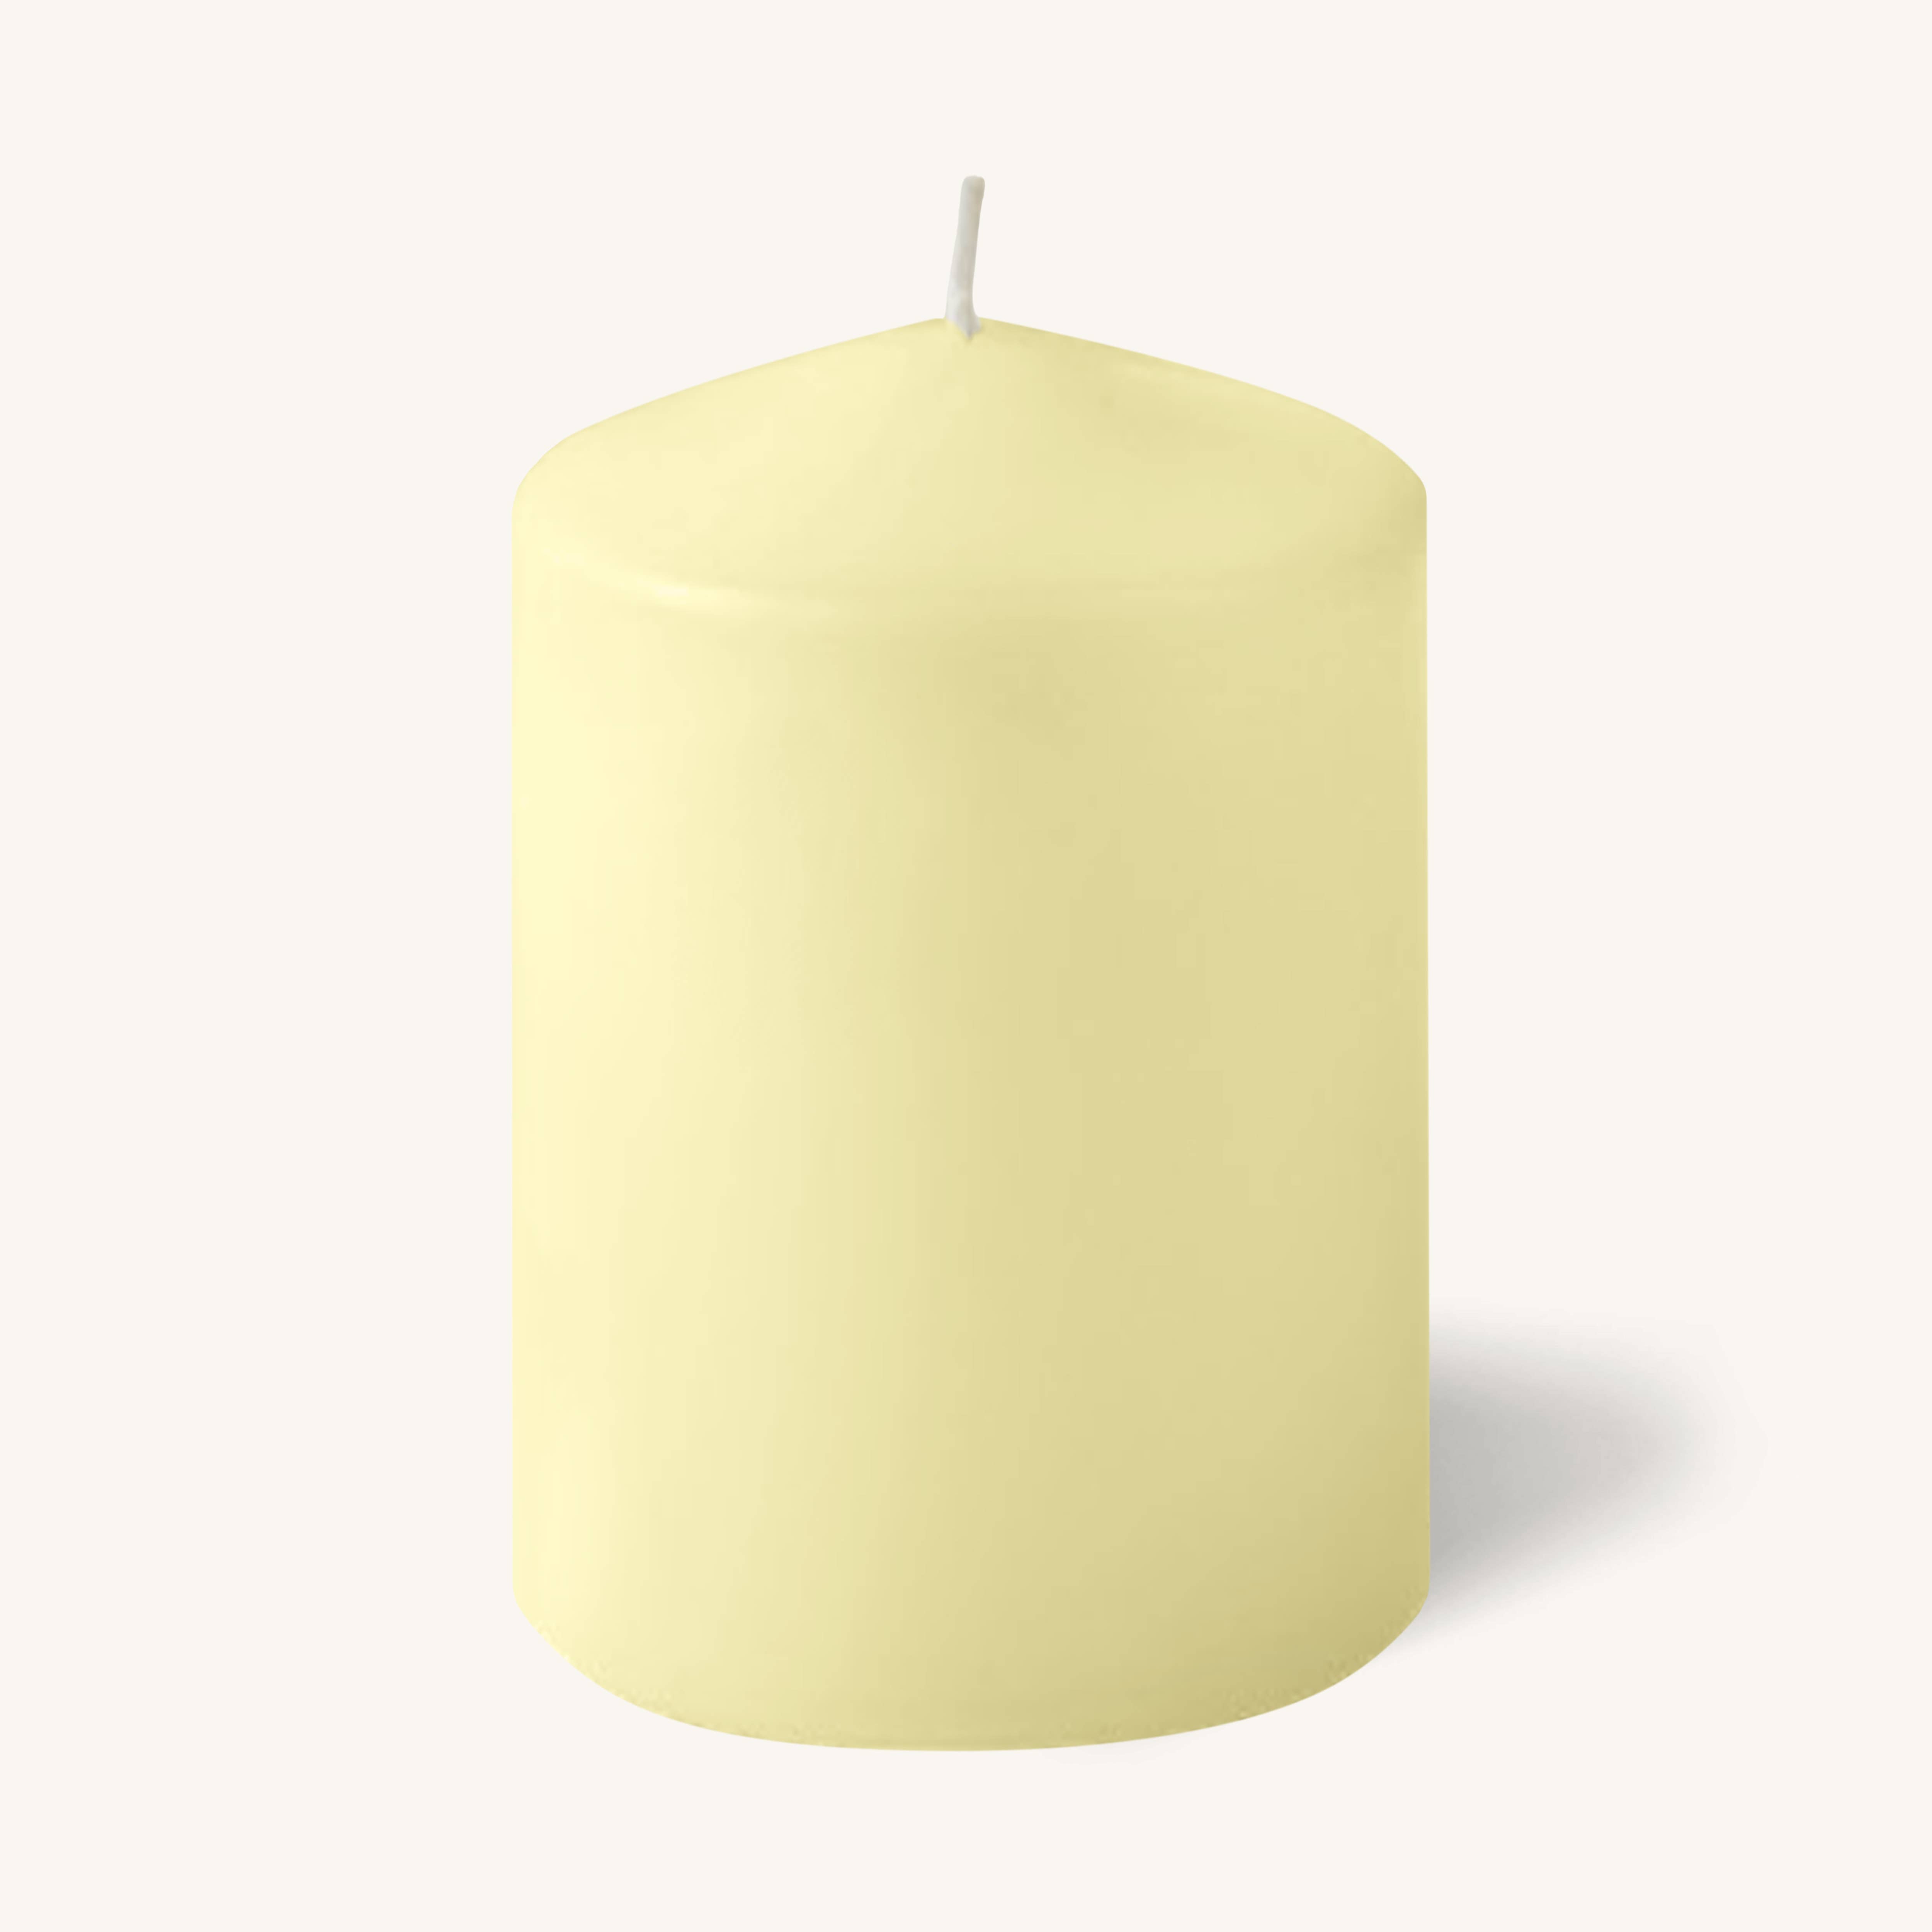 Ivory Pillar Candles - 4" x 8" - 2 Pack